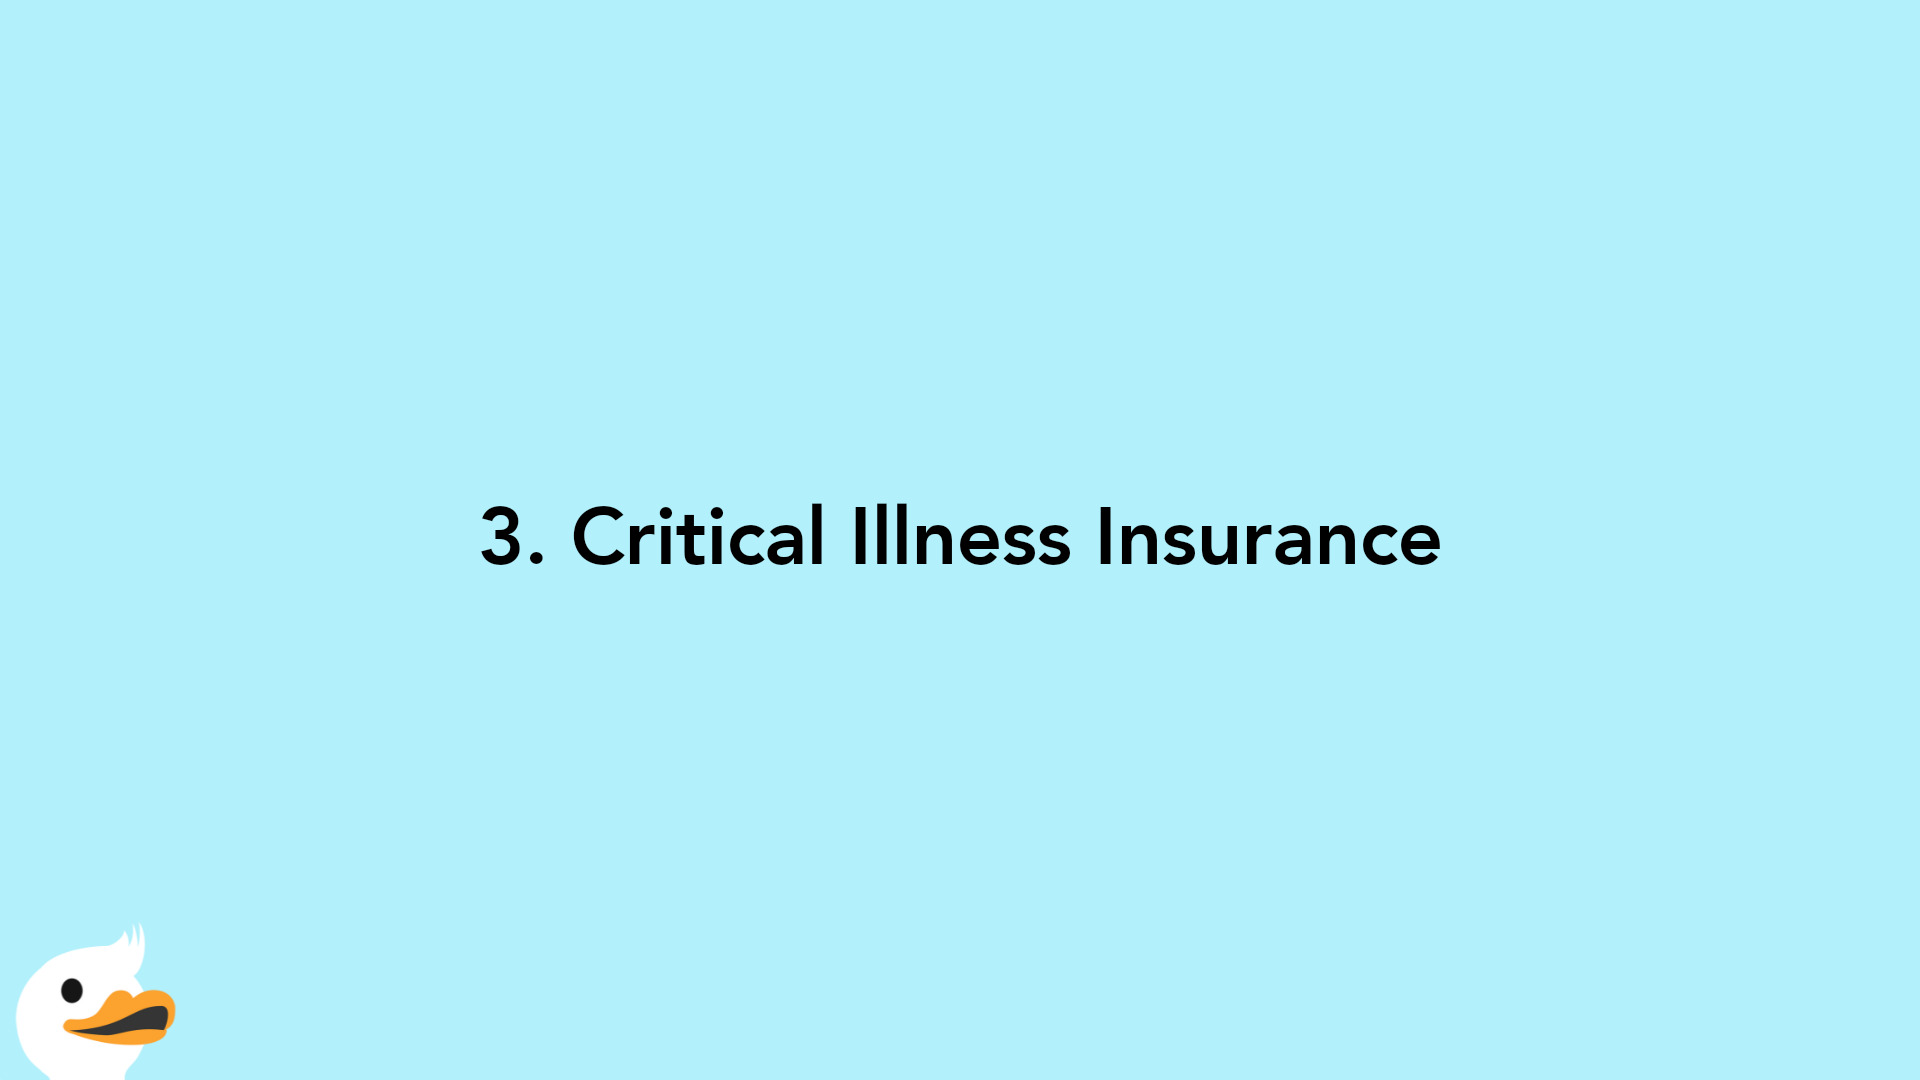 3. Critical Illness Insurance